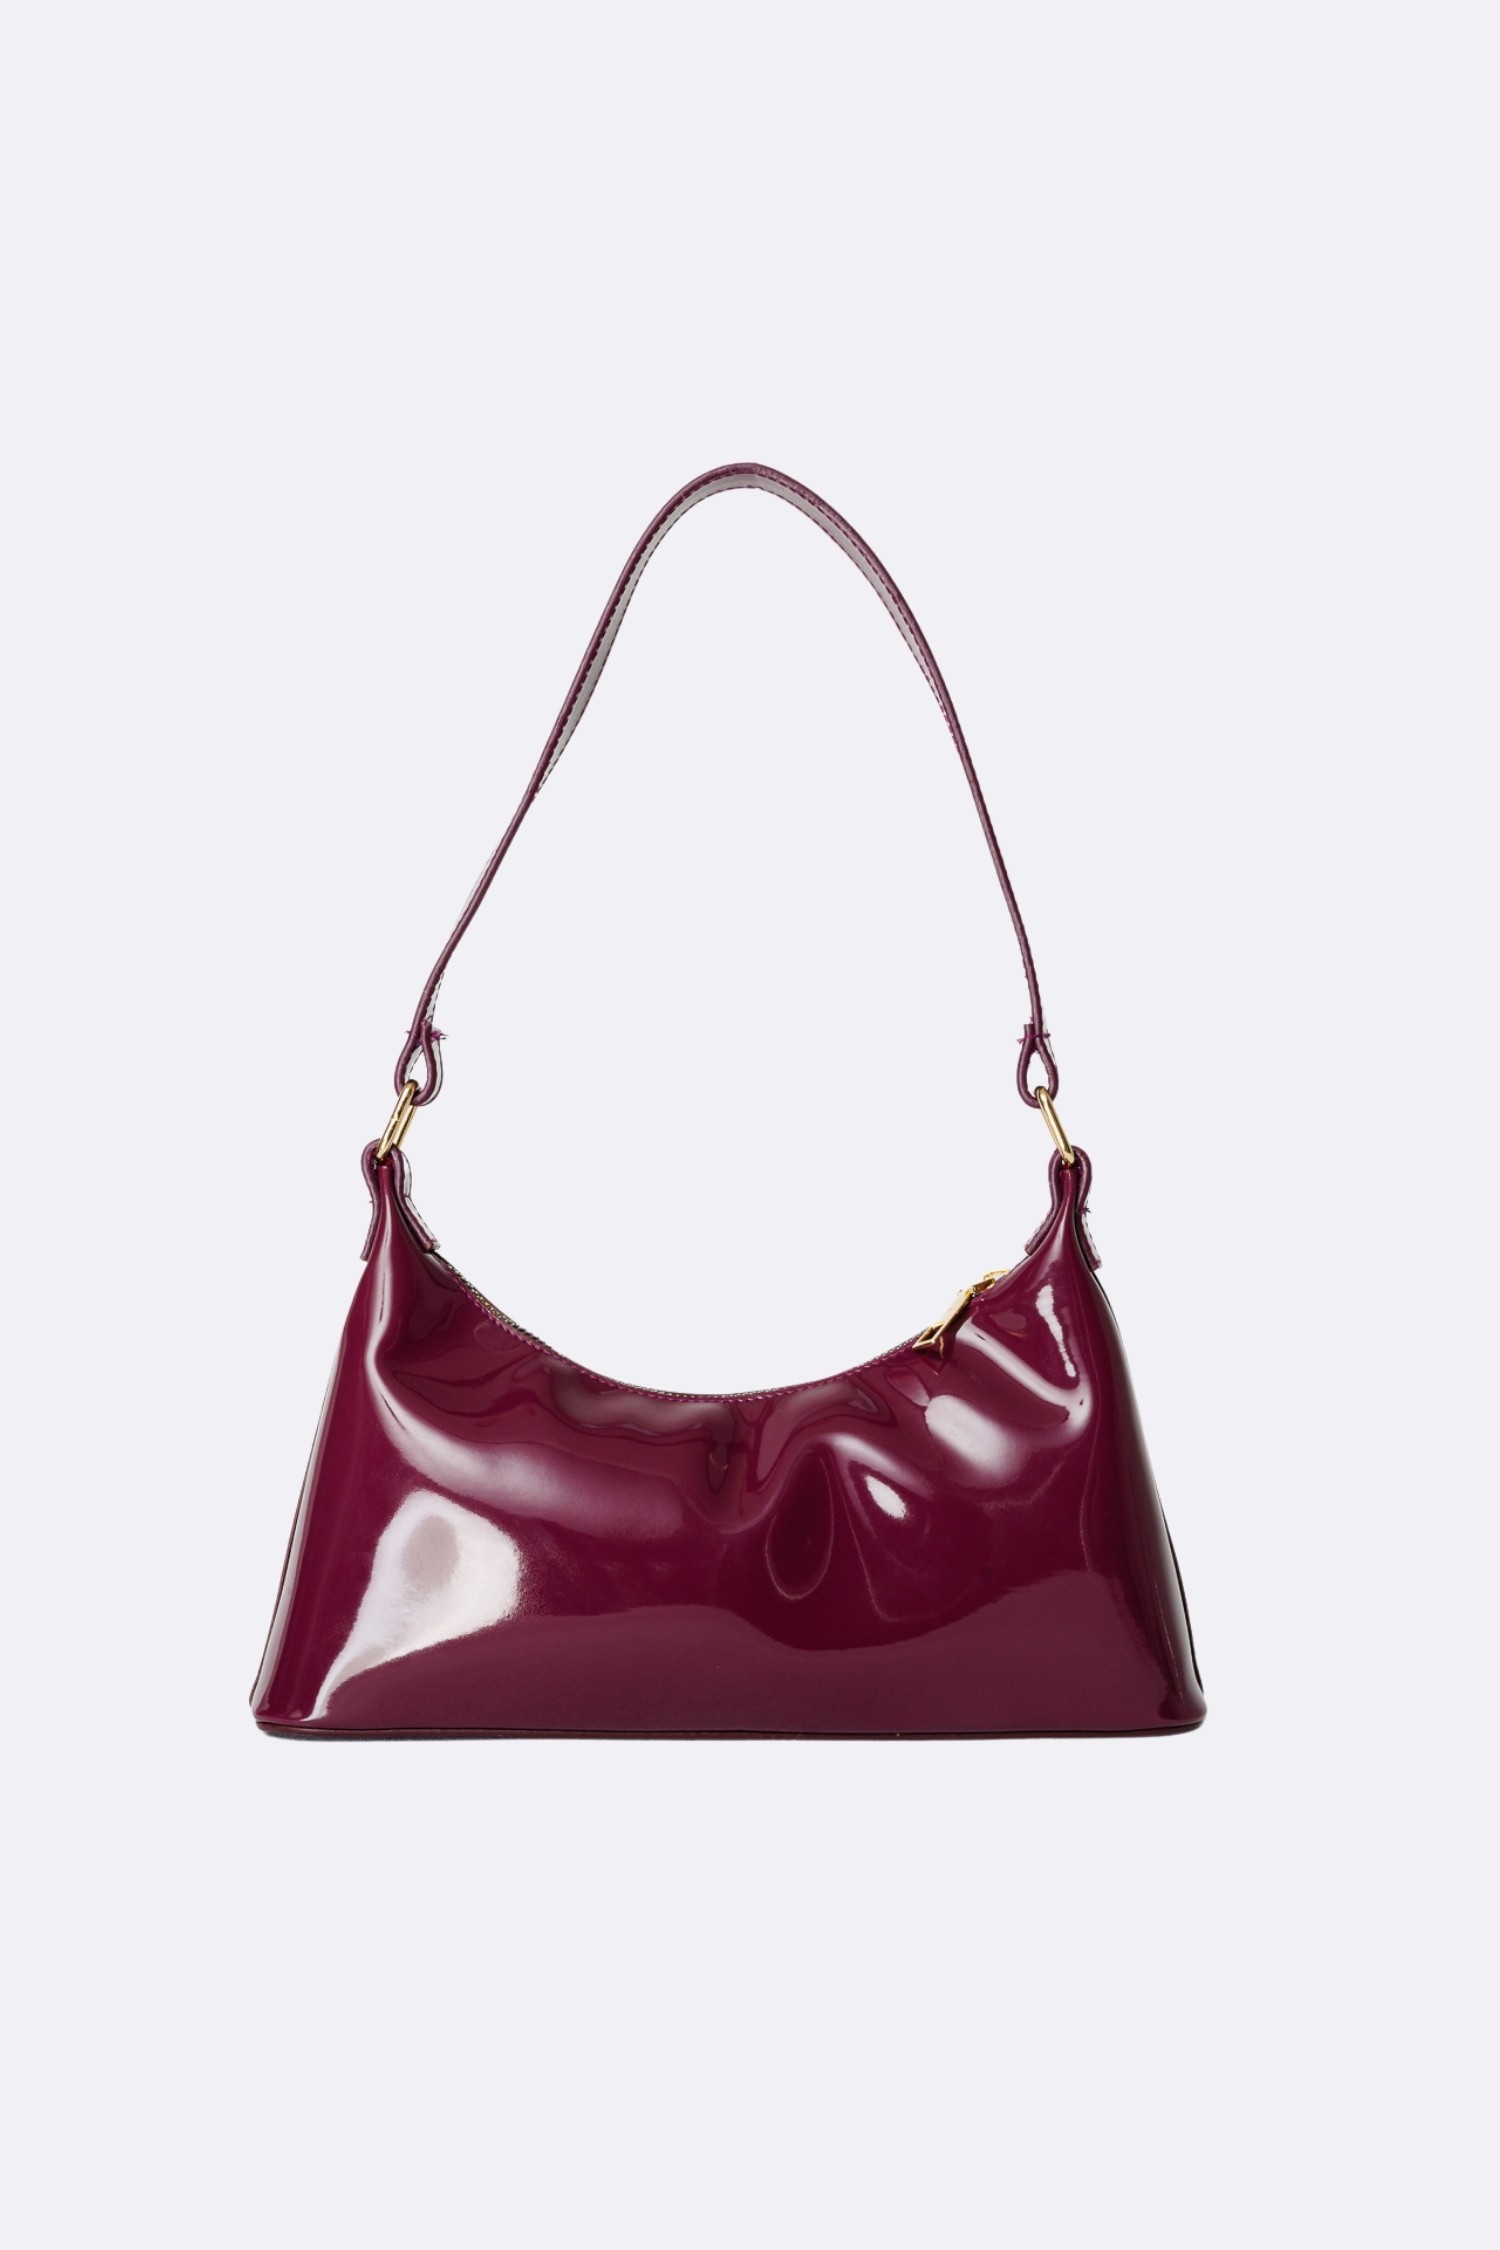 Garden Patent Leather Bag - Purple